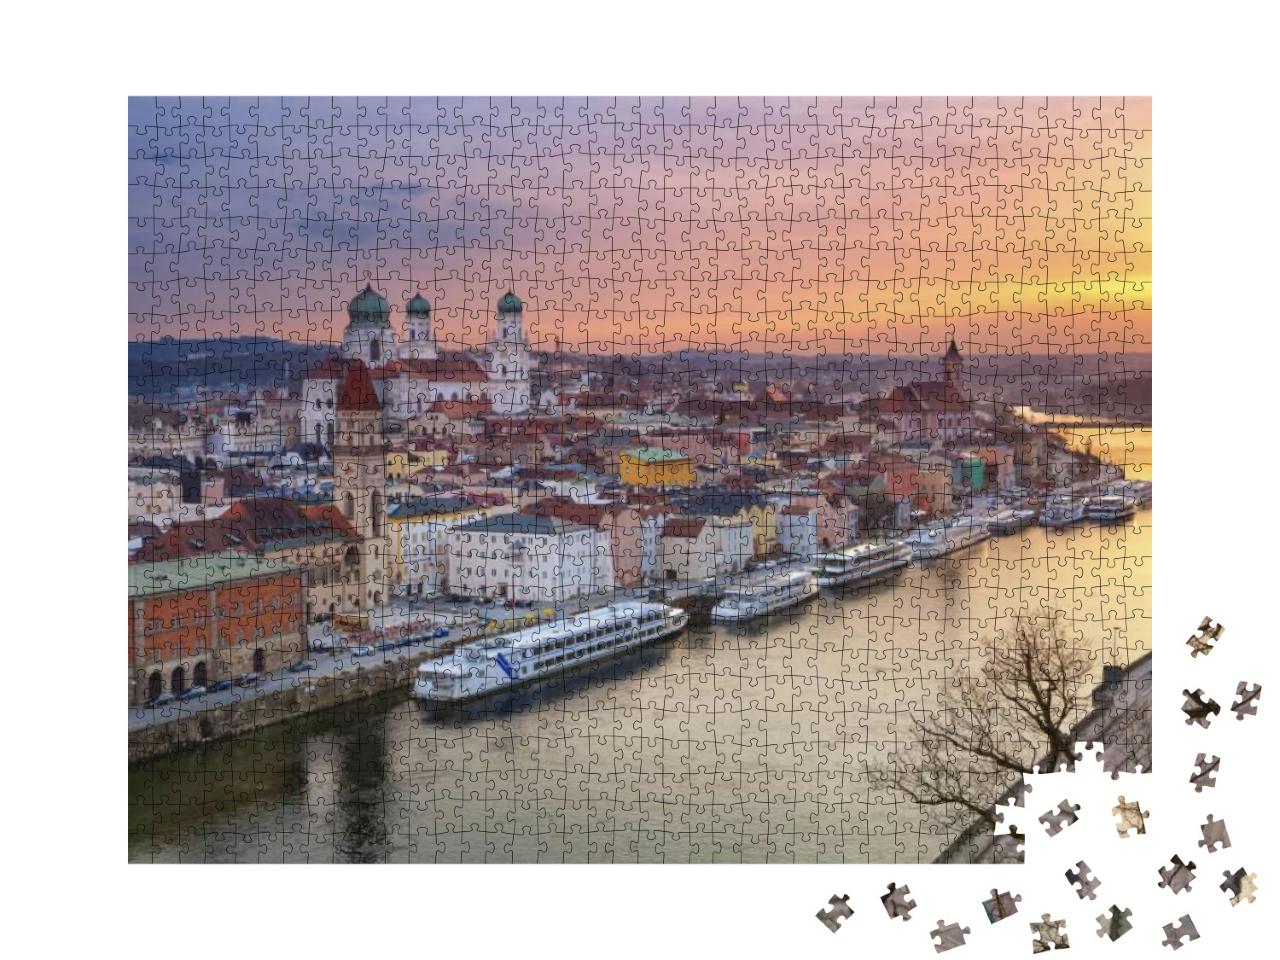 Passau. Passau Skyline During Sunset, Bavaria, Germany... Jigsaw Puzzle with 1000 pieces